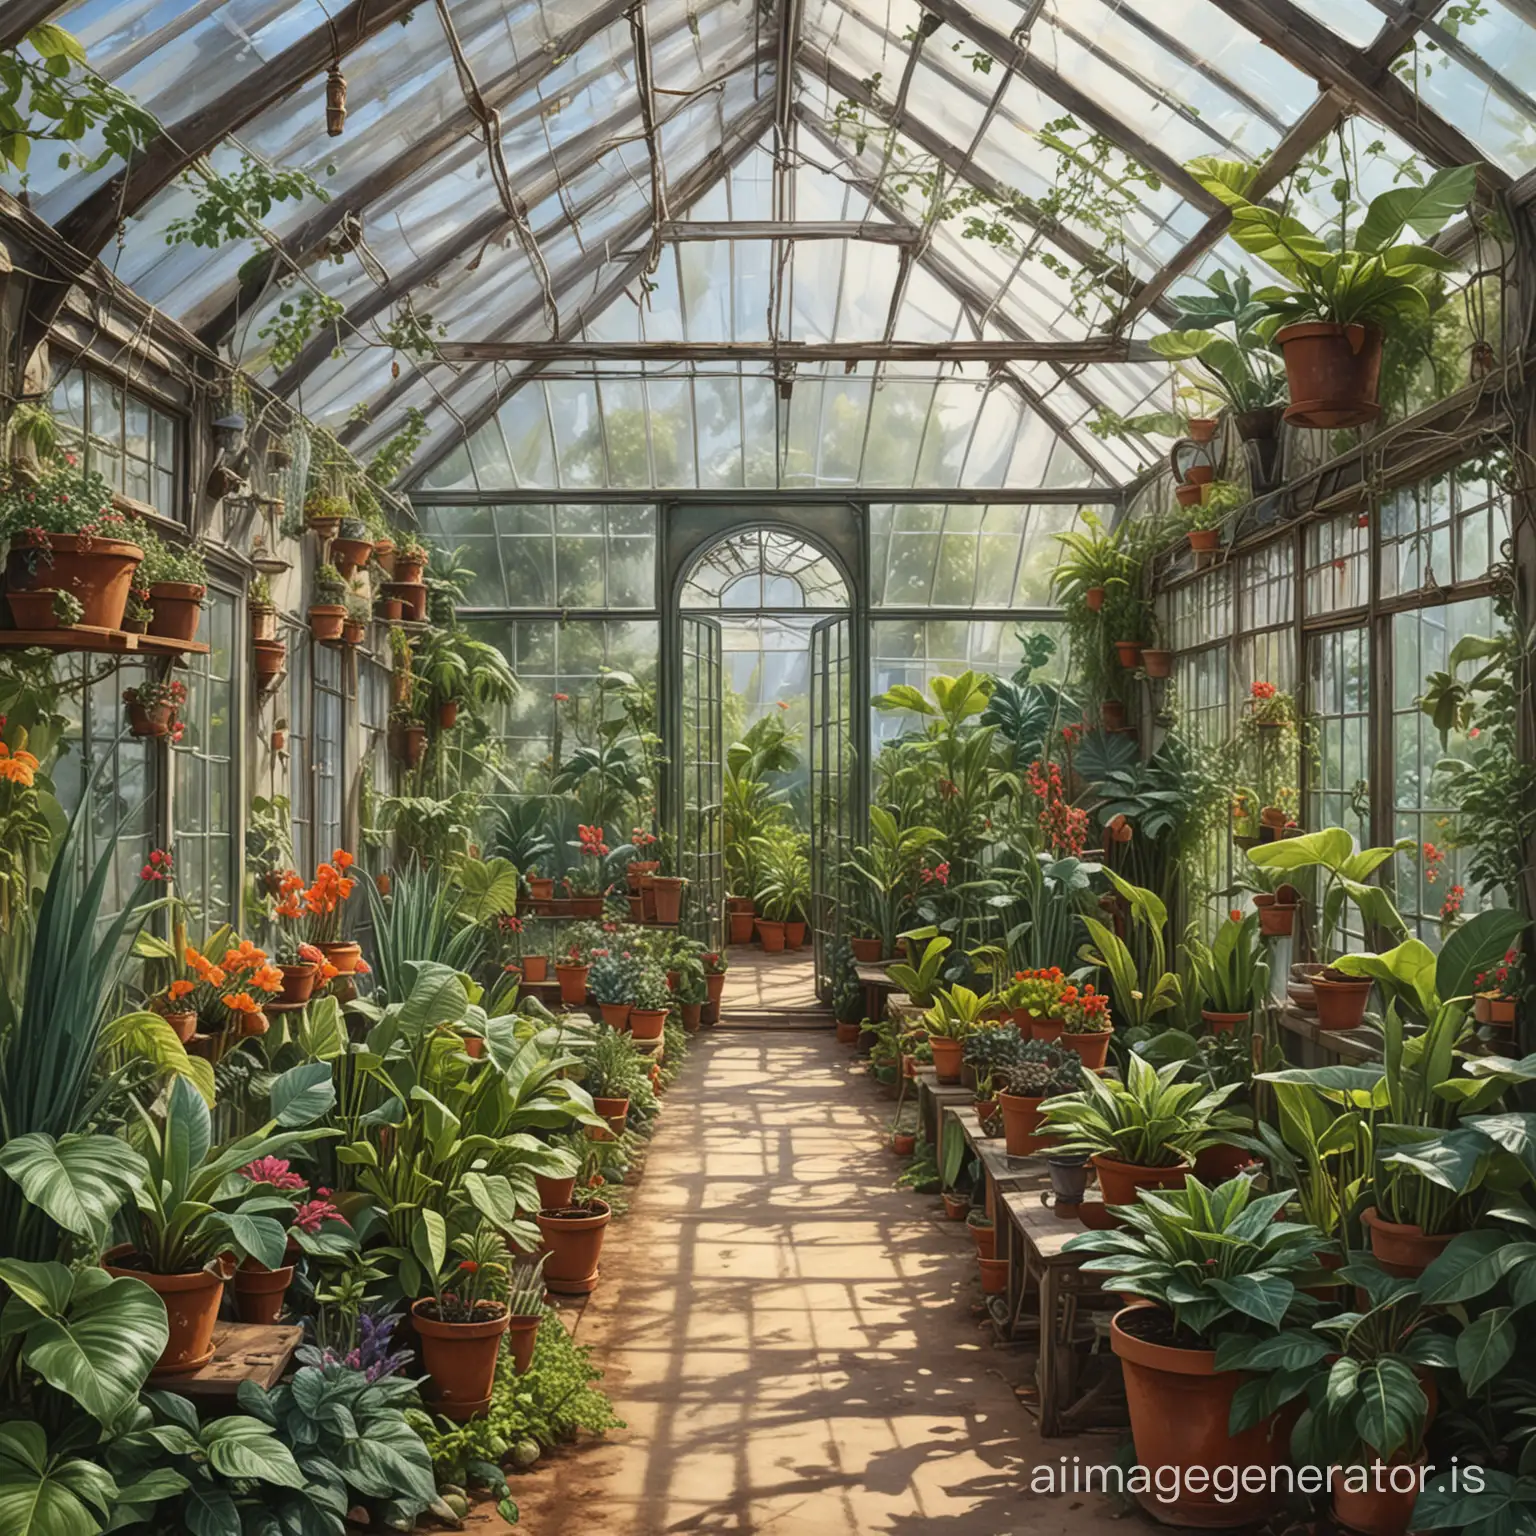 Greenhouse with exotic plants, fantasy art, no modern equipment, menor